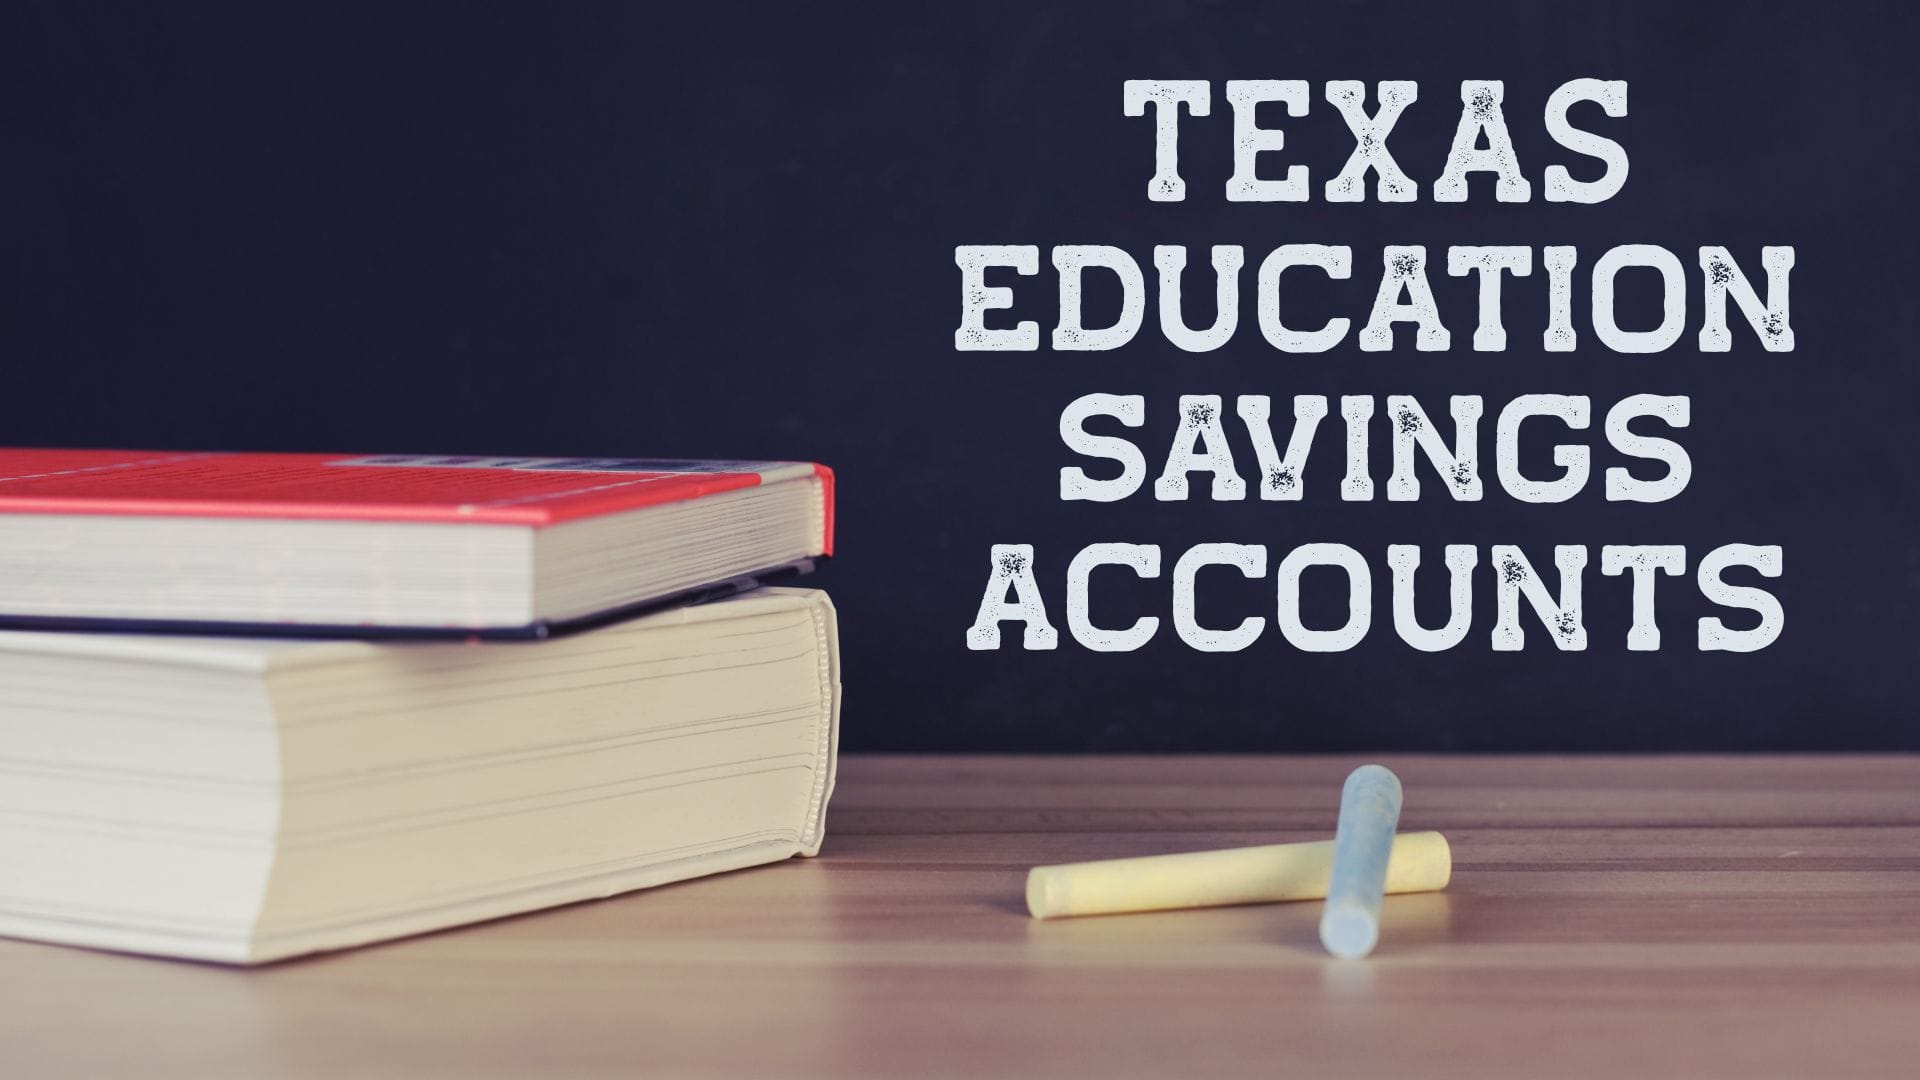 education savings accounts